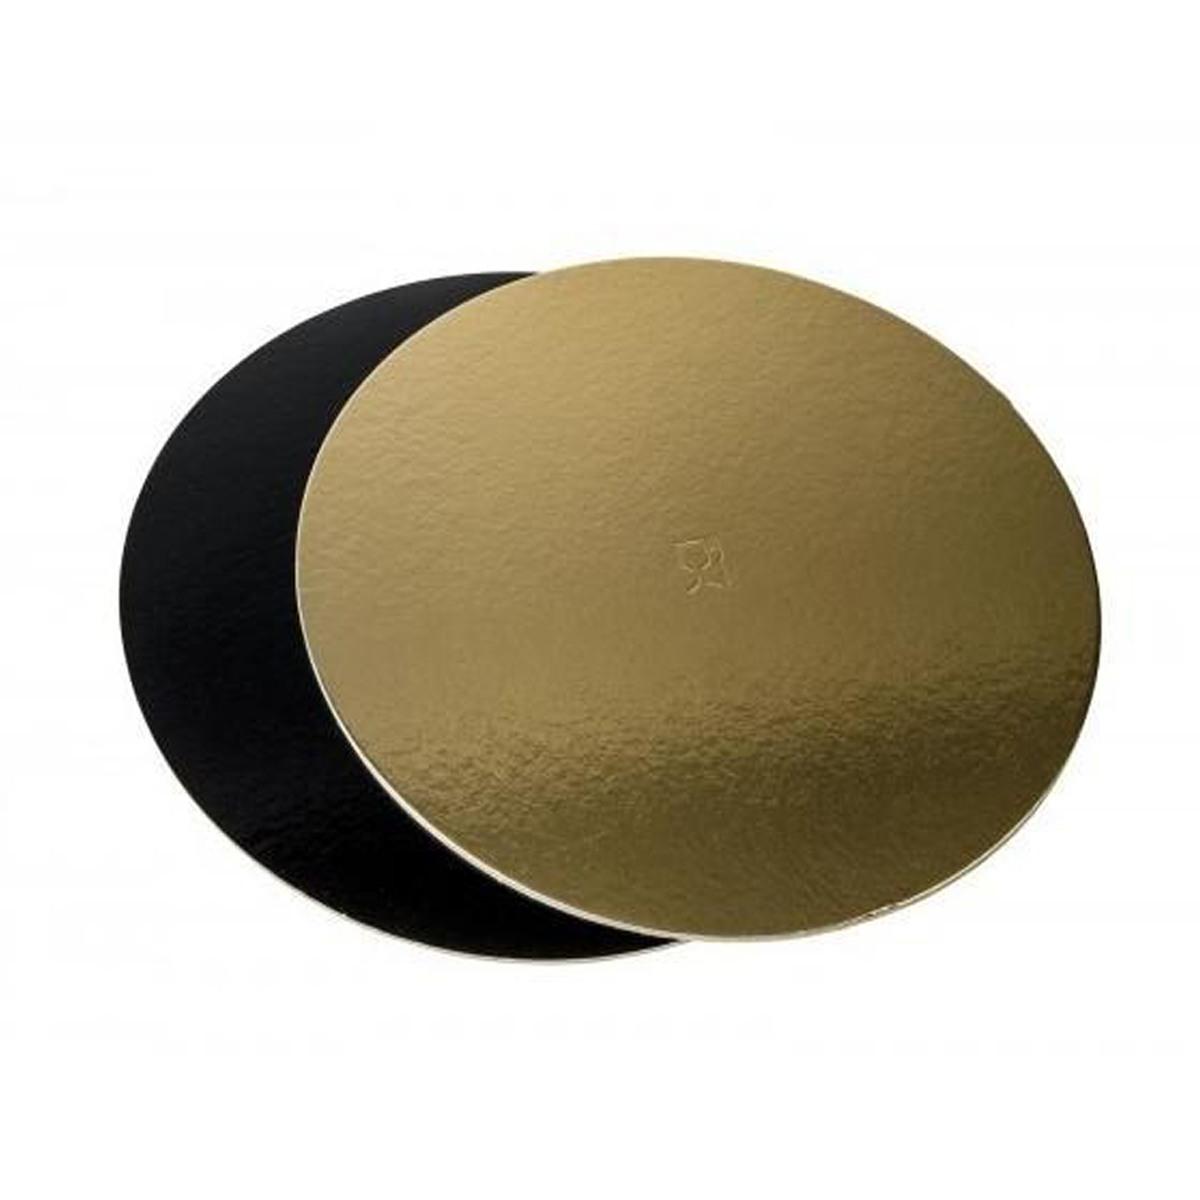 Disco nero/oro bordo liscio 10 kg n°36